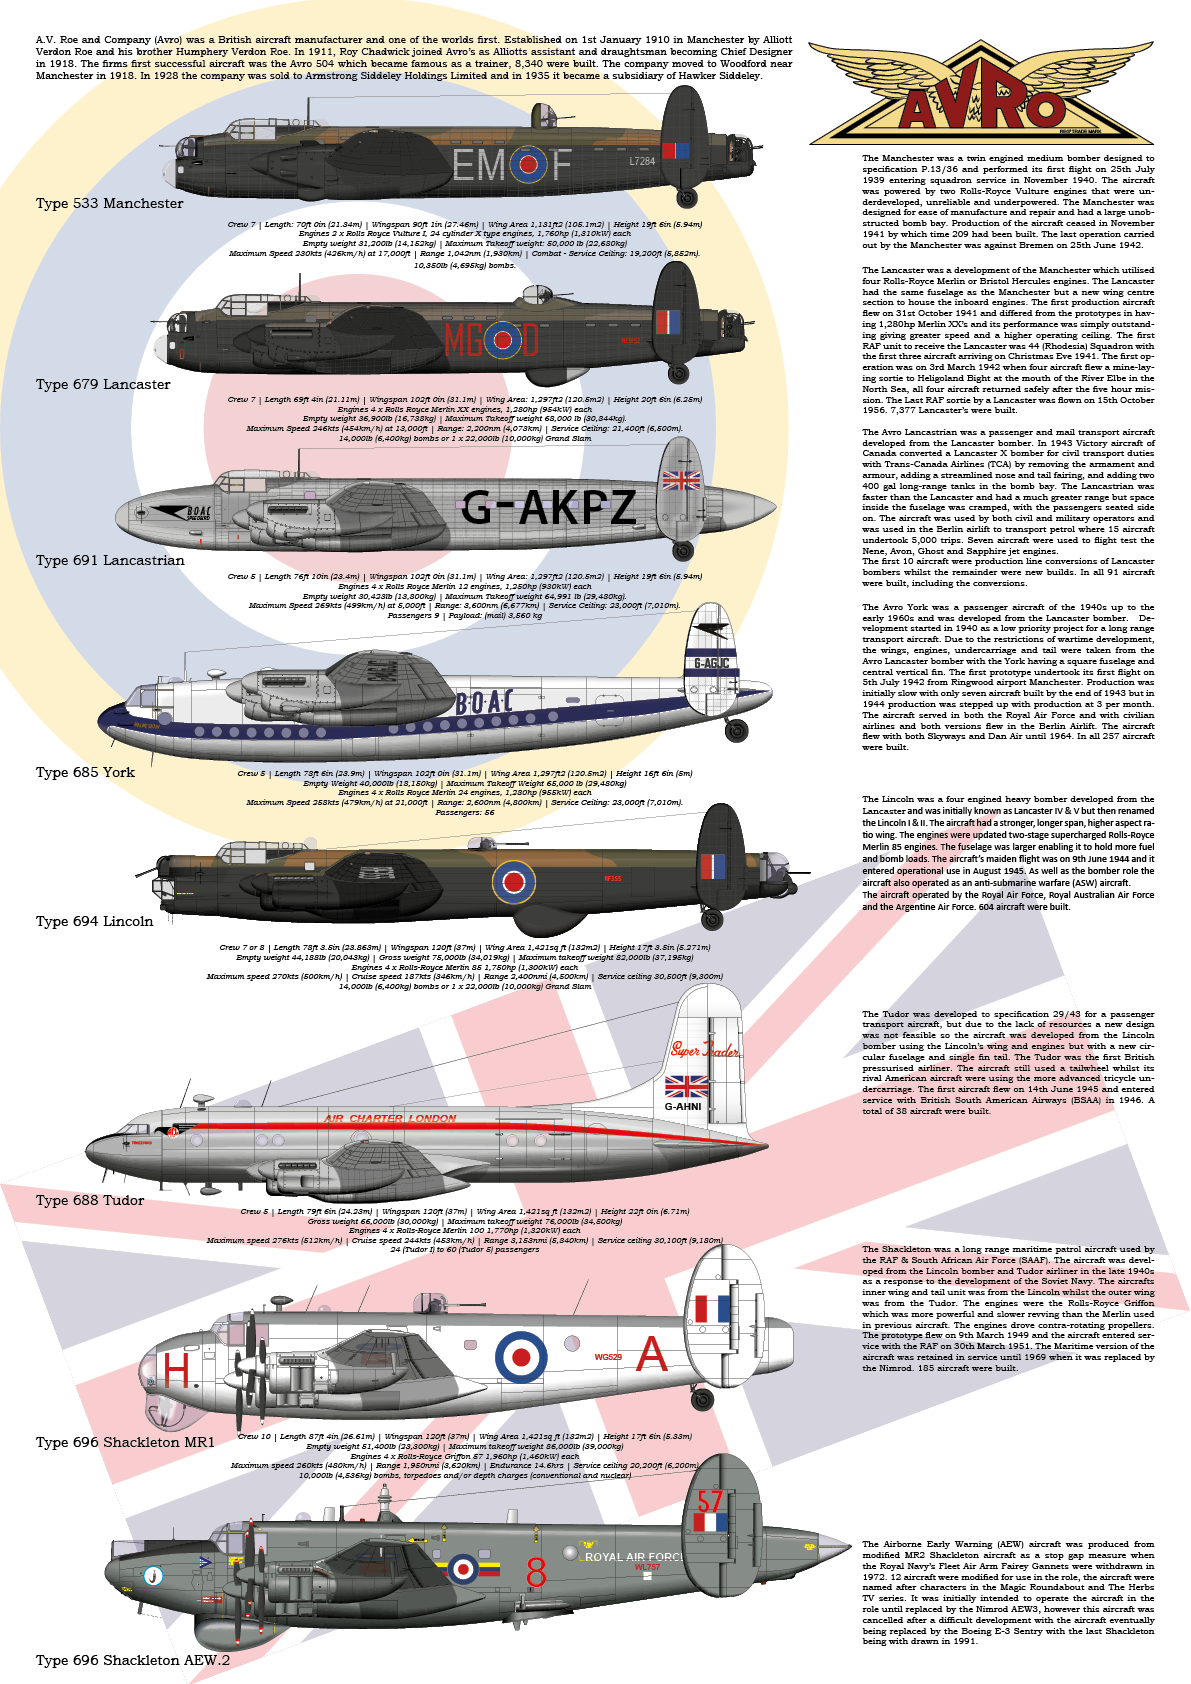 Avro Lancaster family of aircraft